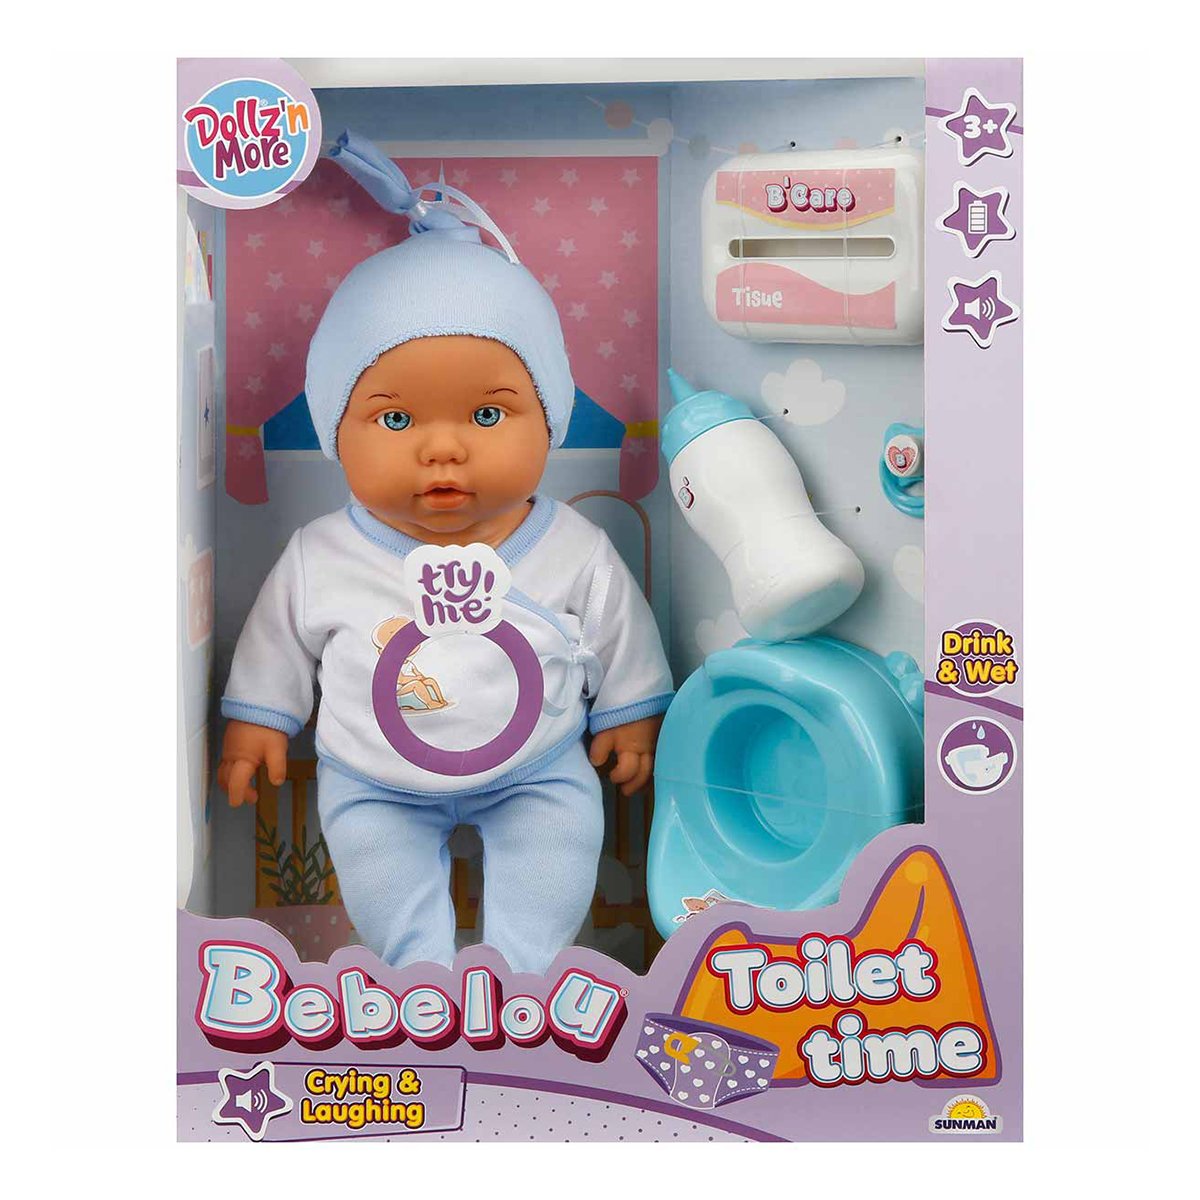 Papusa bebelus Bebelou, Dollz n More, Toilet Time, 35 cm, albastru albastru imagine 2022 protejamcopilaria.ro